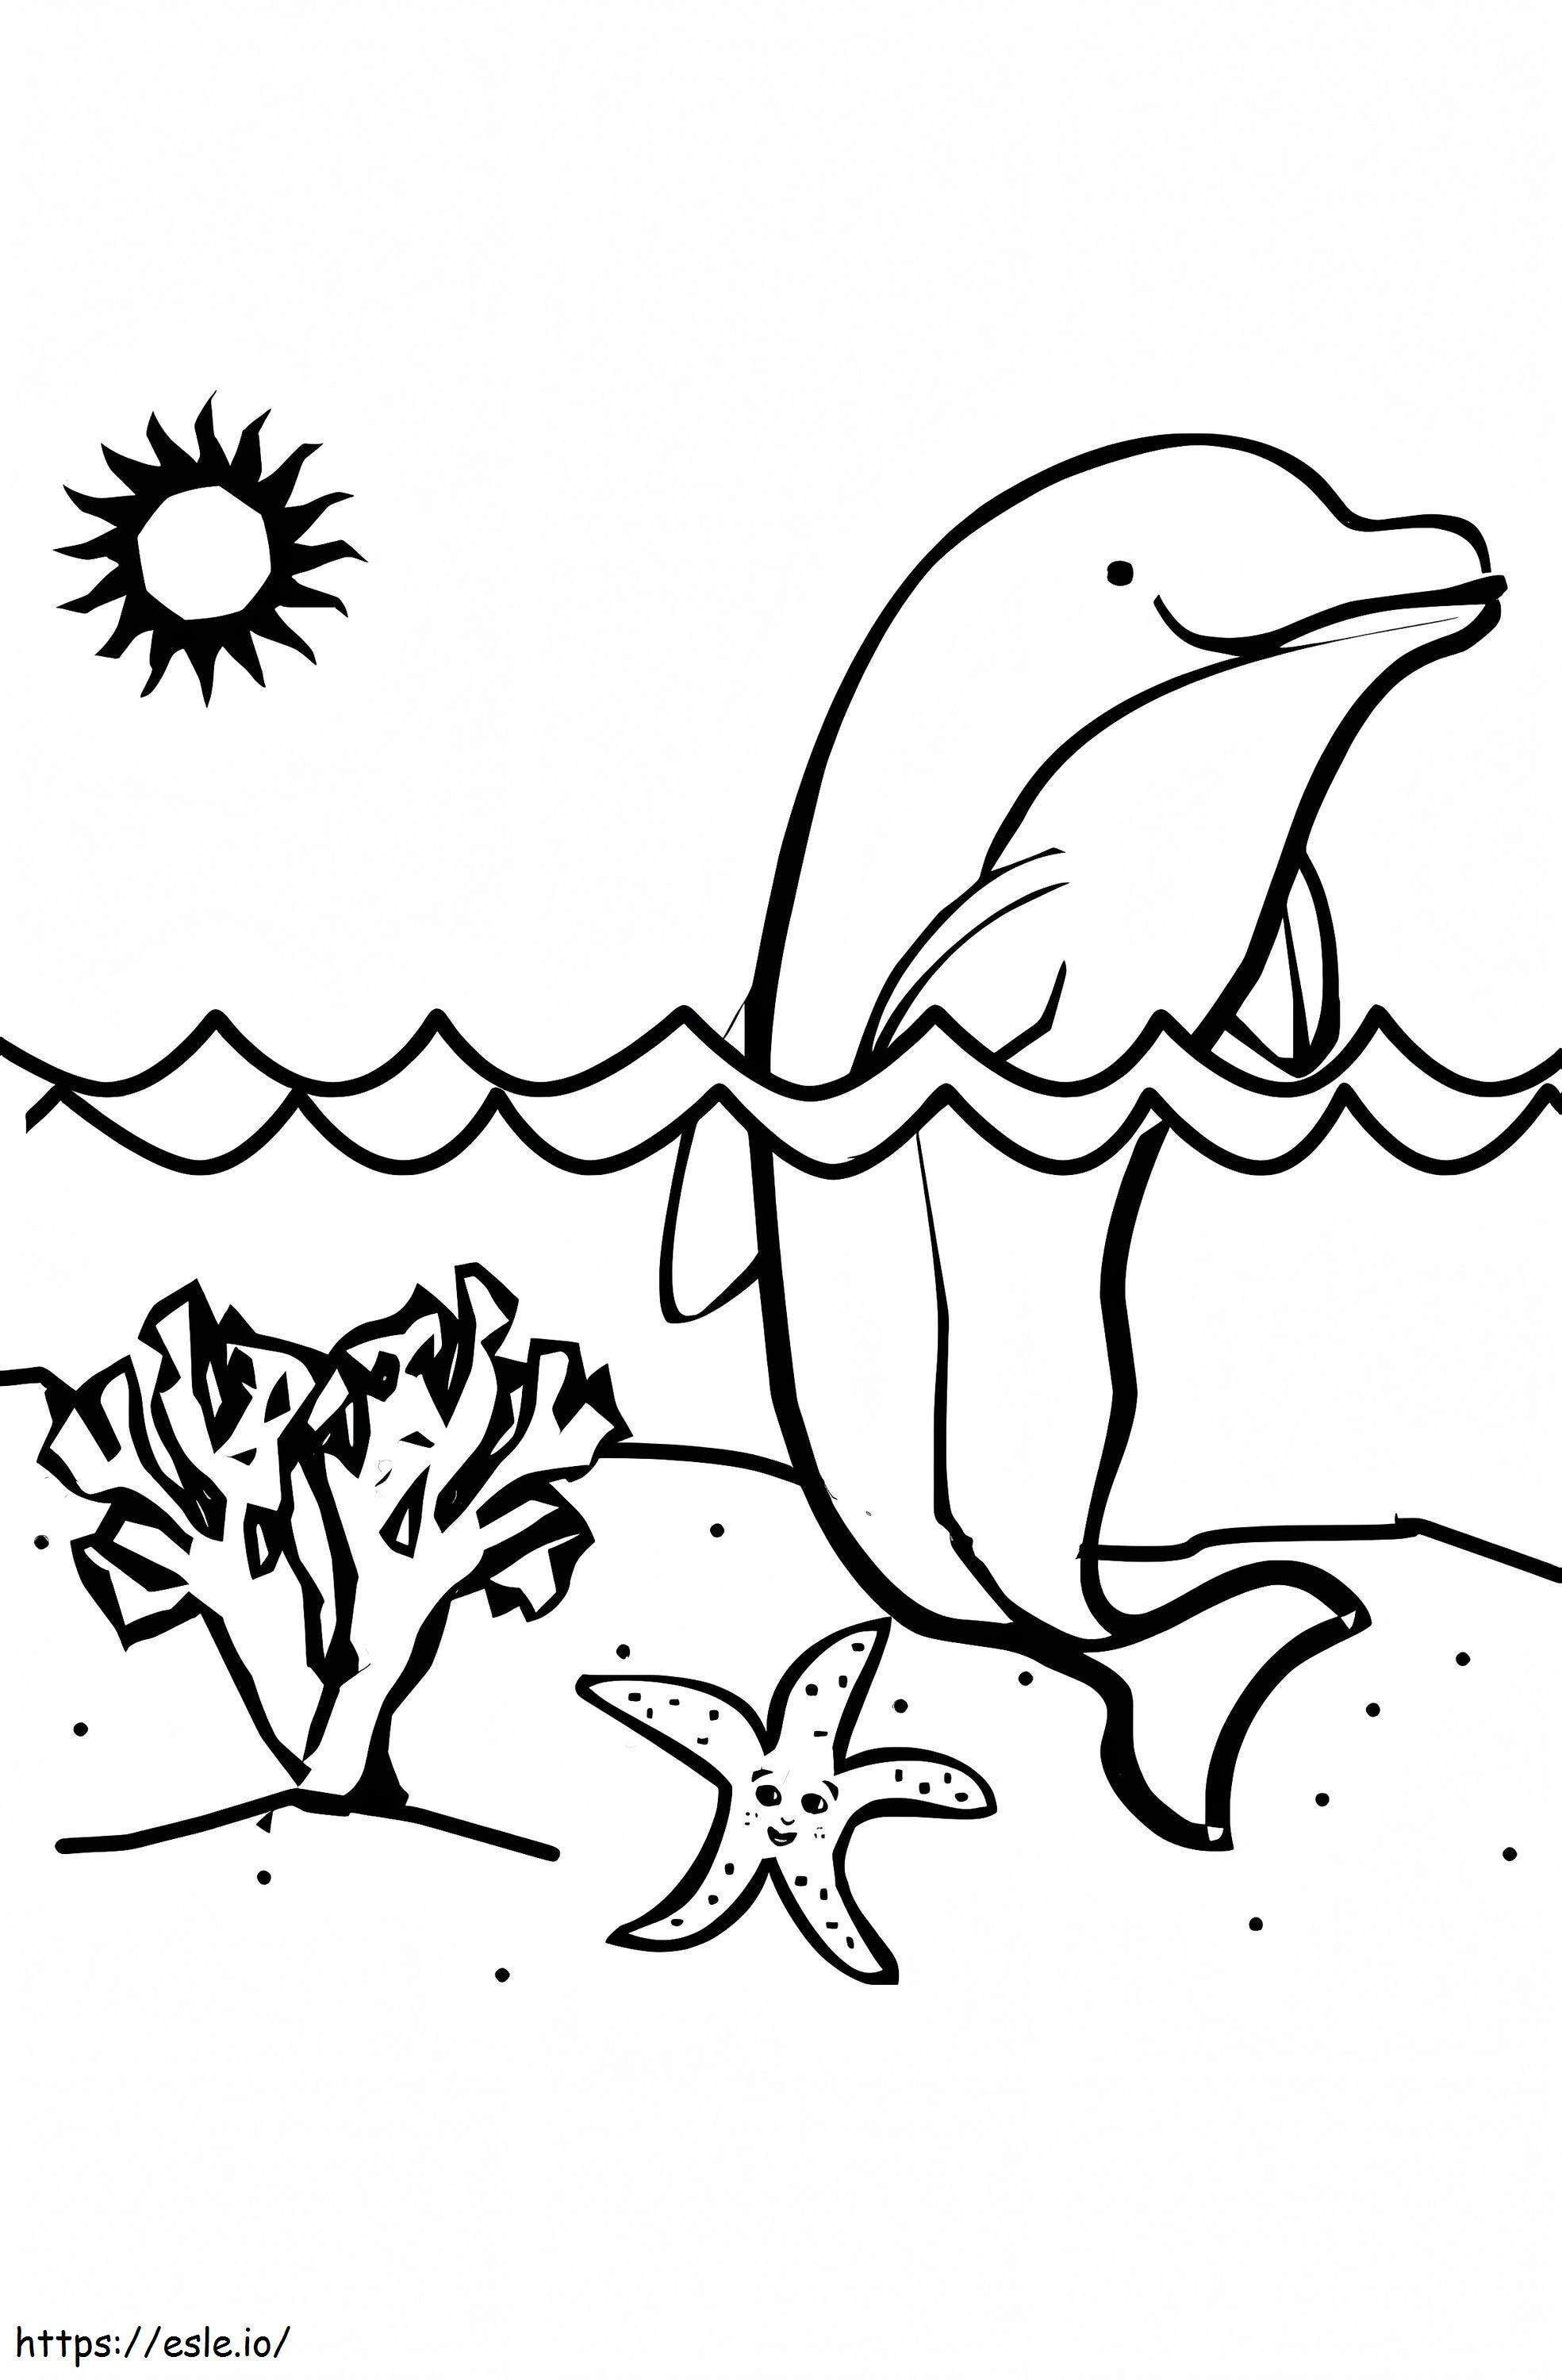 Wolny delfin kolorowanka